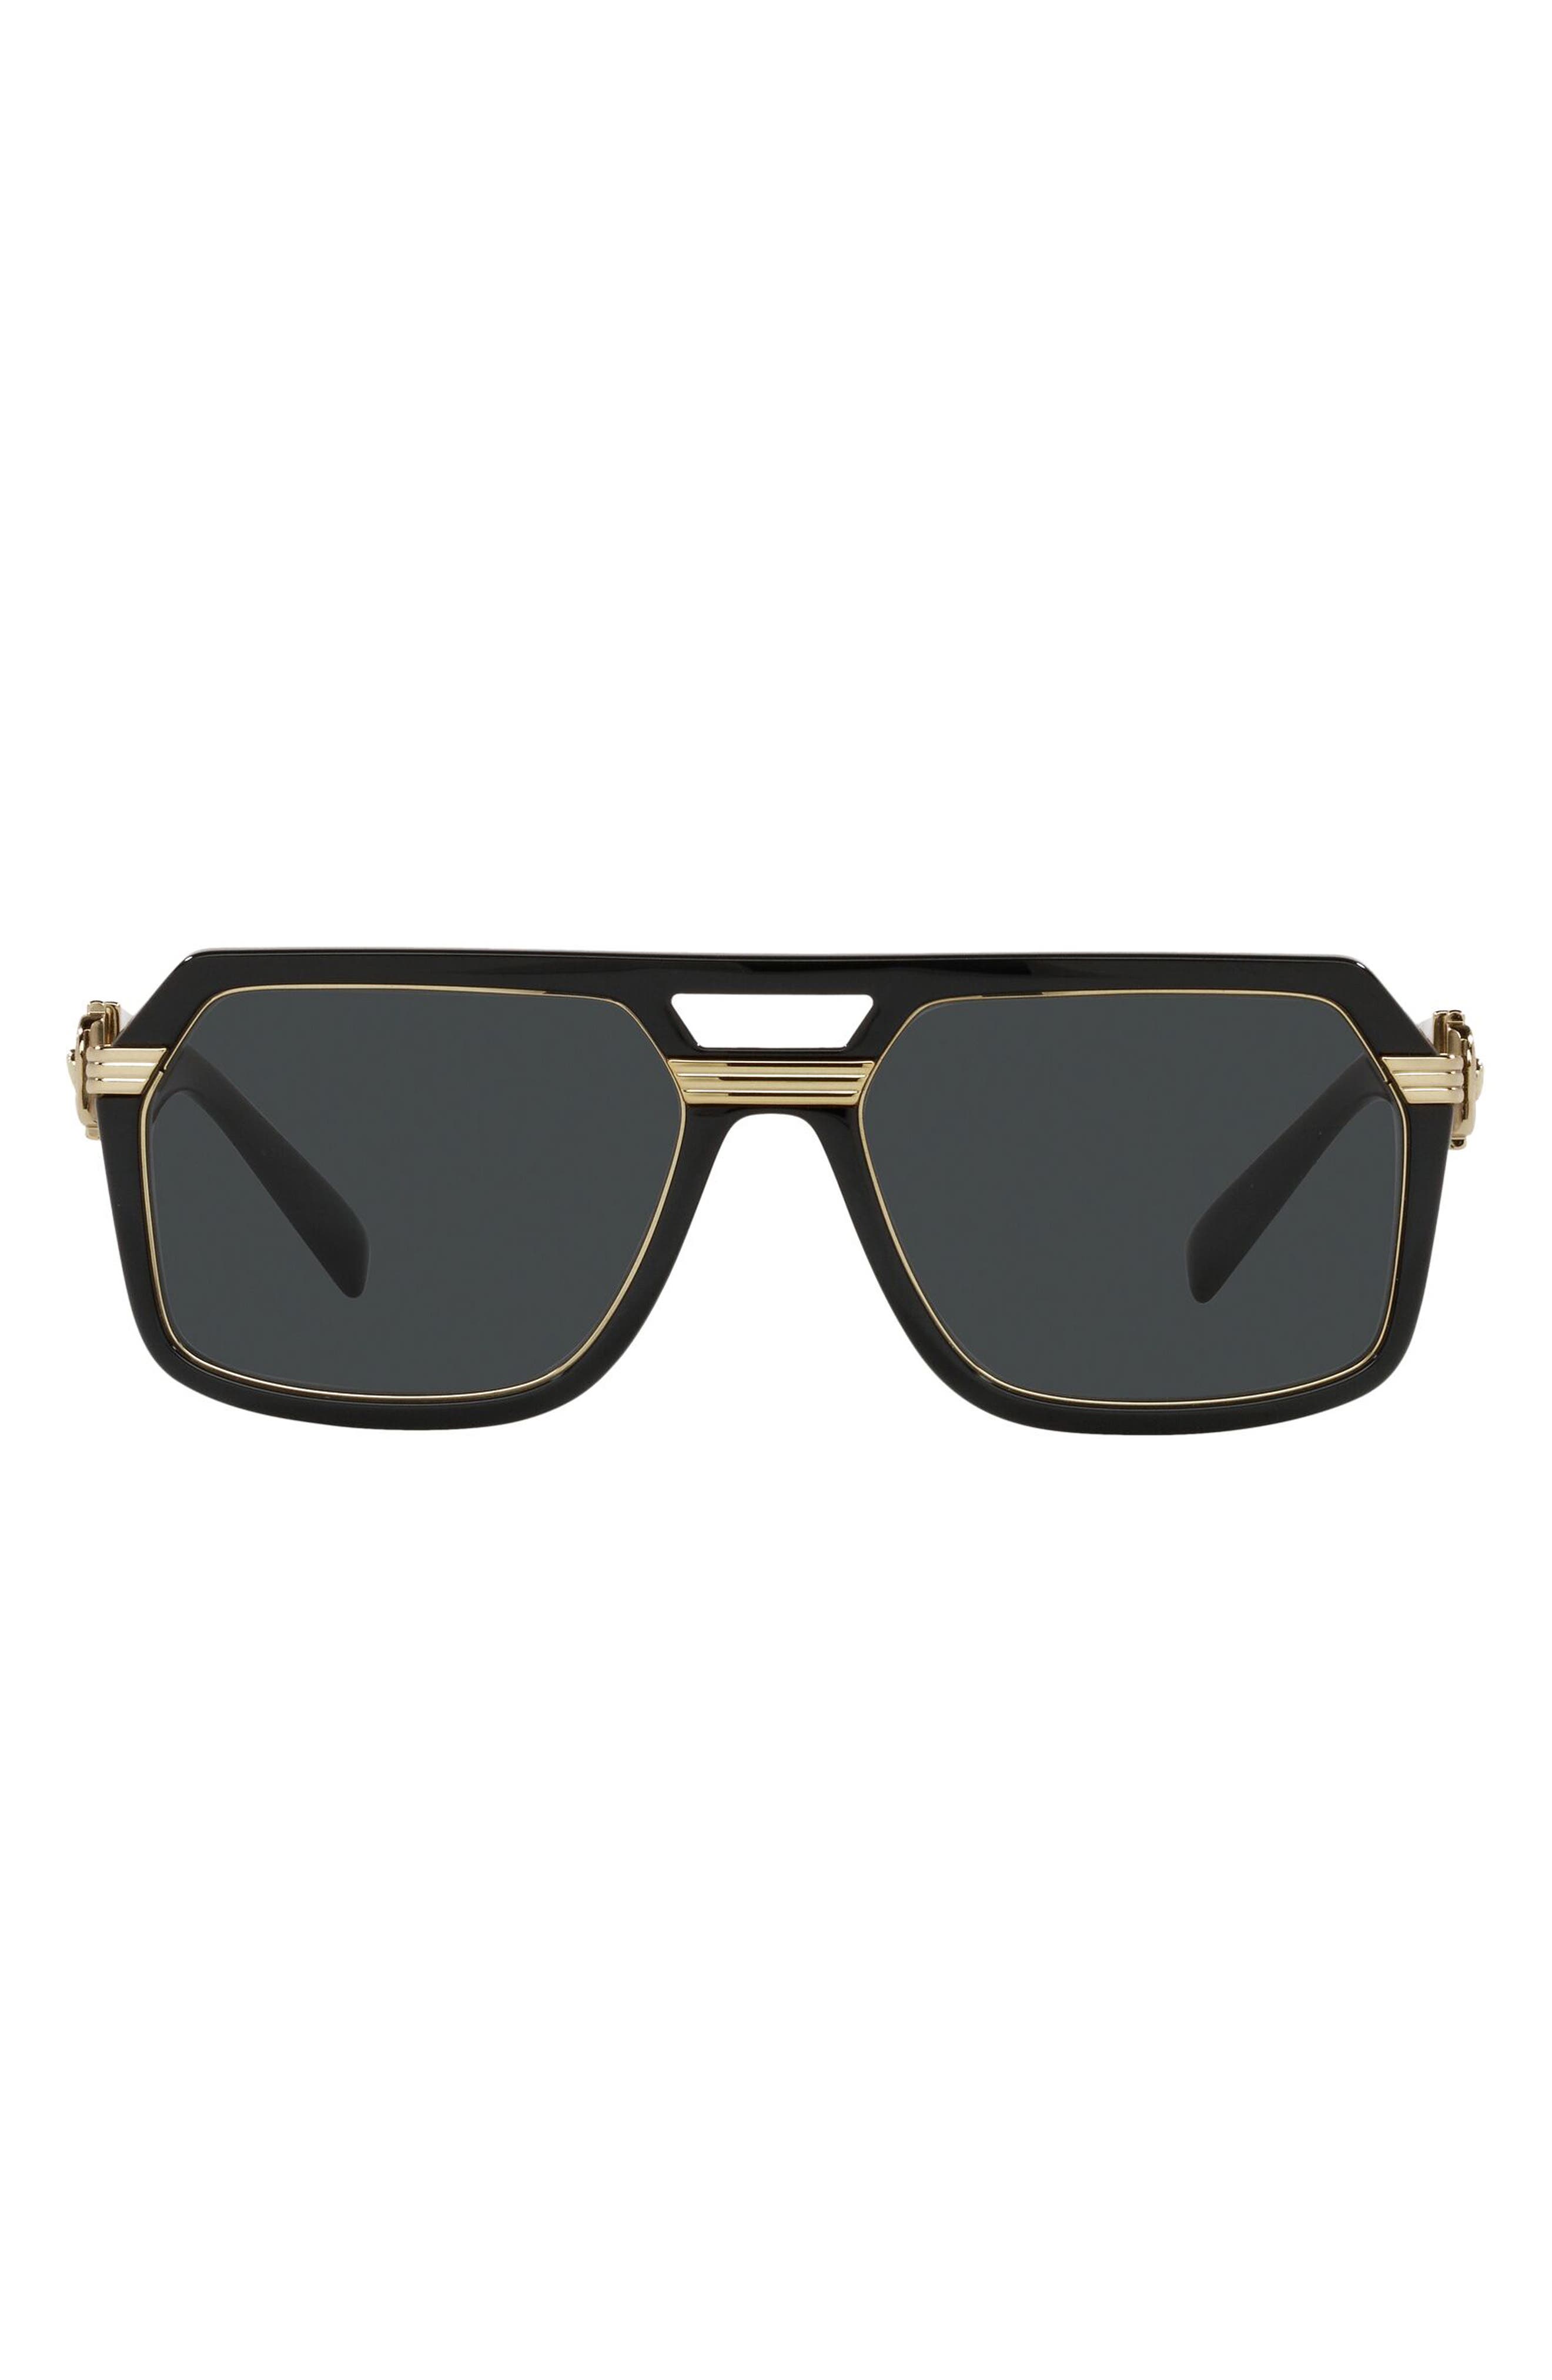 Versace 58mm Aviator Sunglasses in Black/Dark Grey at Nordstrom